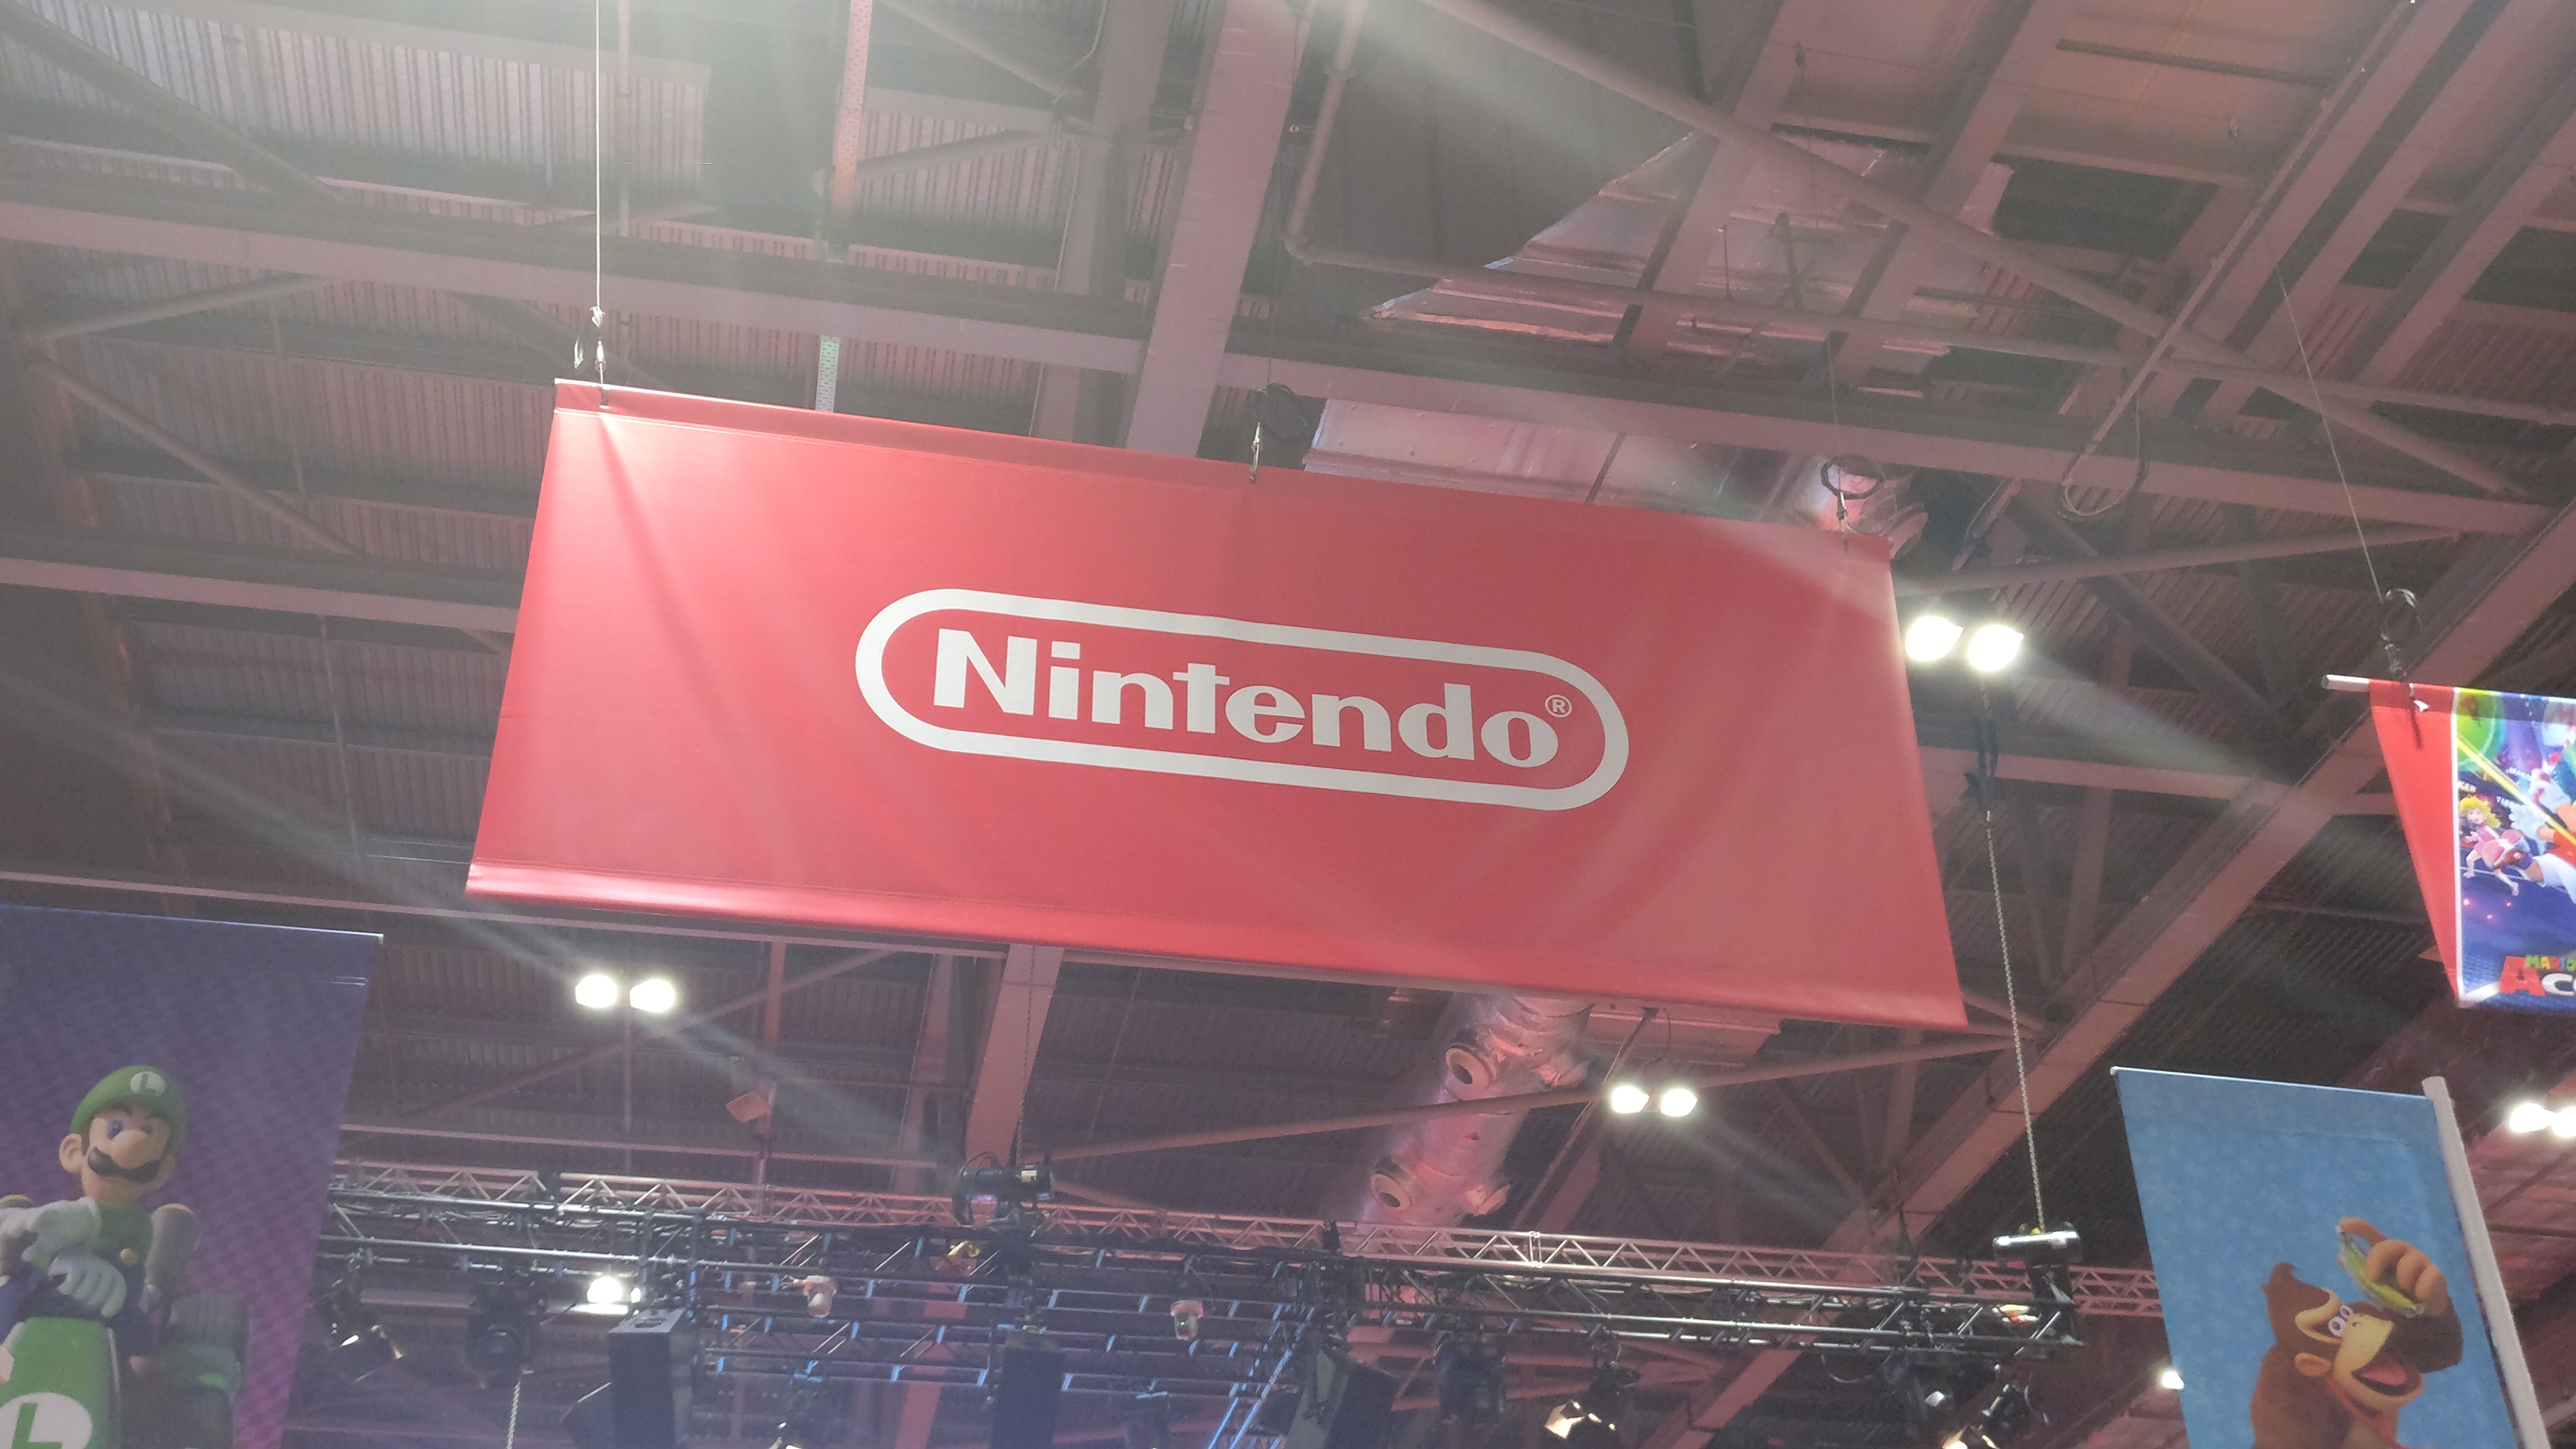 Nintendo at MCM London 2018